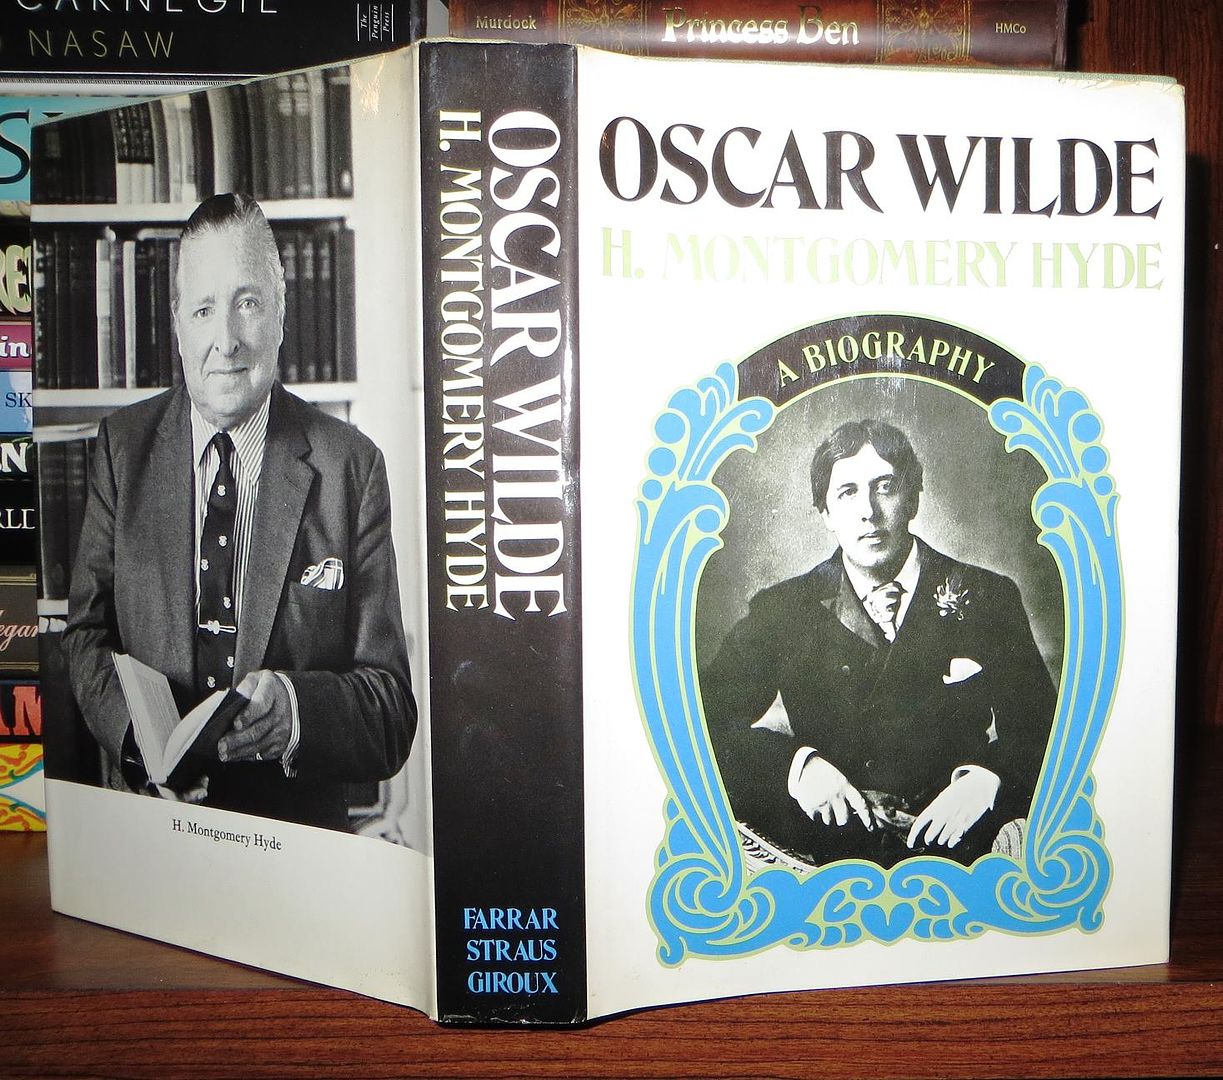 HYDE, H. MONTGOMERY - OSCAR WILDE - Oscar Wilde a Biography